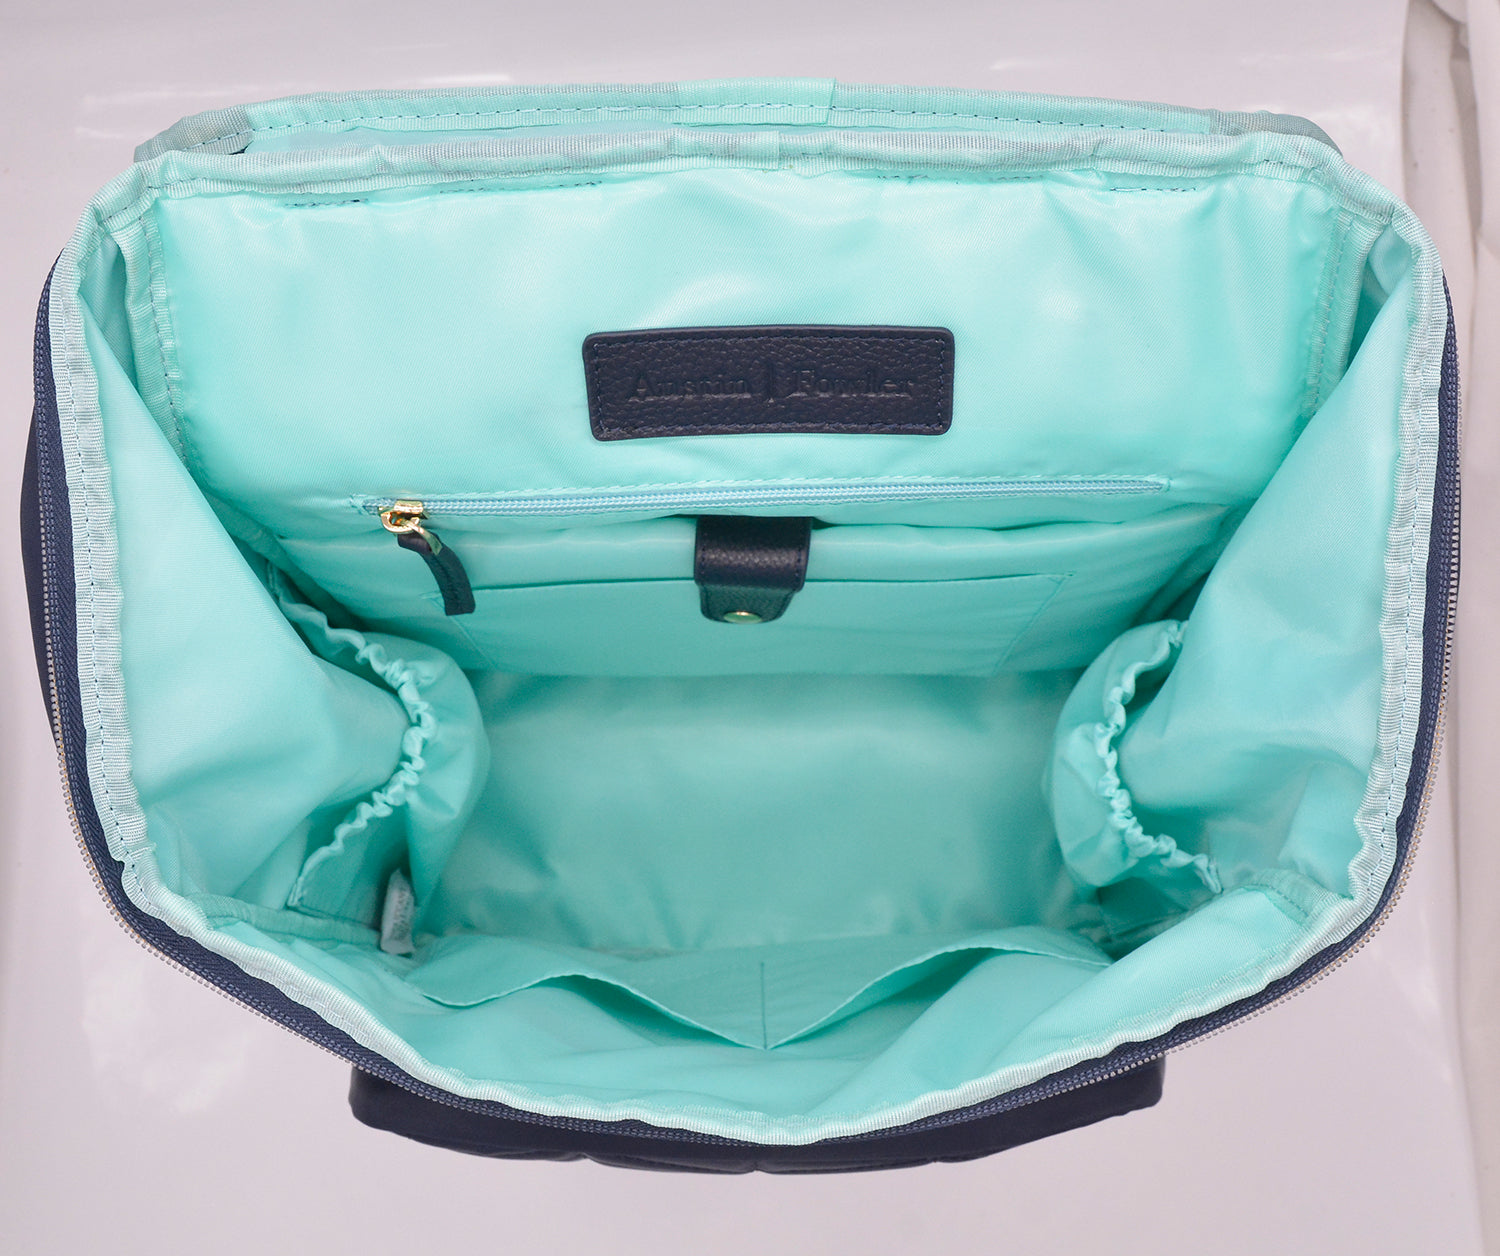 the brielle mini backpack in black – Austin